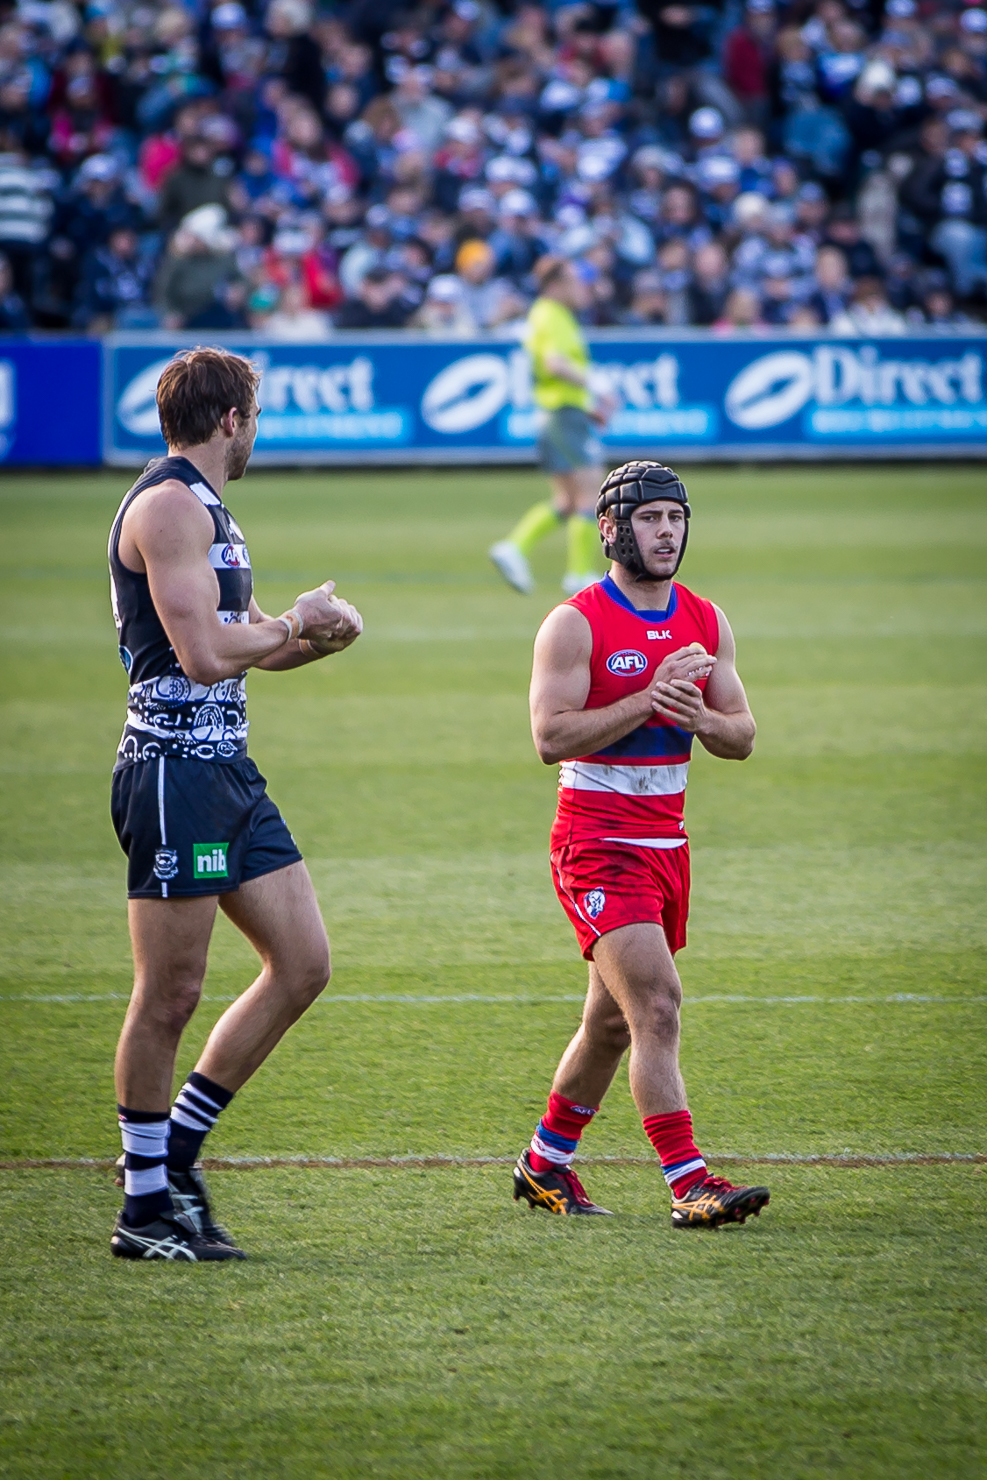 18th July 2015 - Geelong v Western Bulldogs - Corey Enright Geelong  - 187 cm (6ft 2in) - Caleb Daniel Western Bulldogs - 168 cm (5ft 6in)